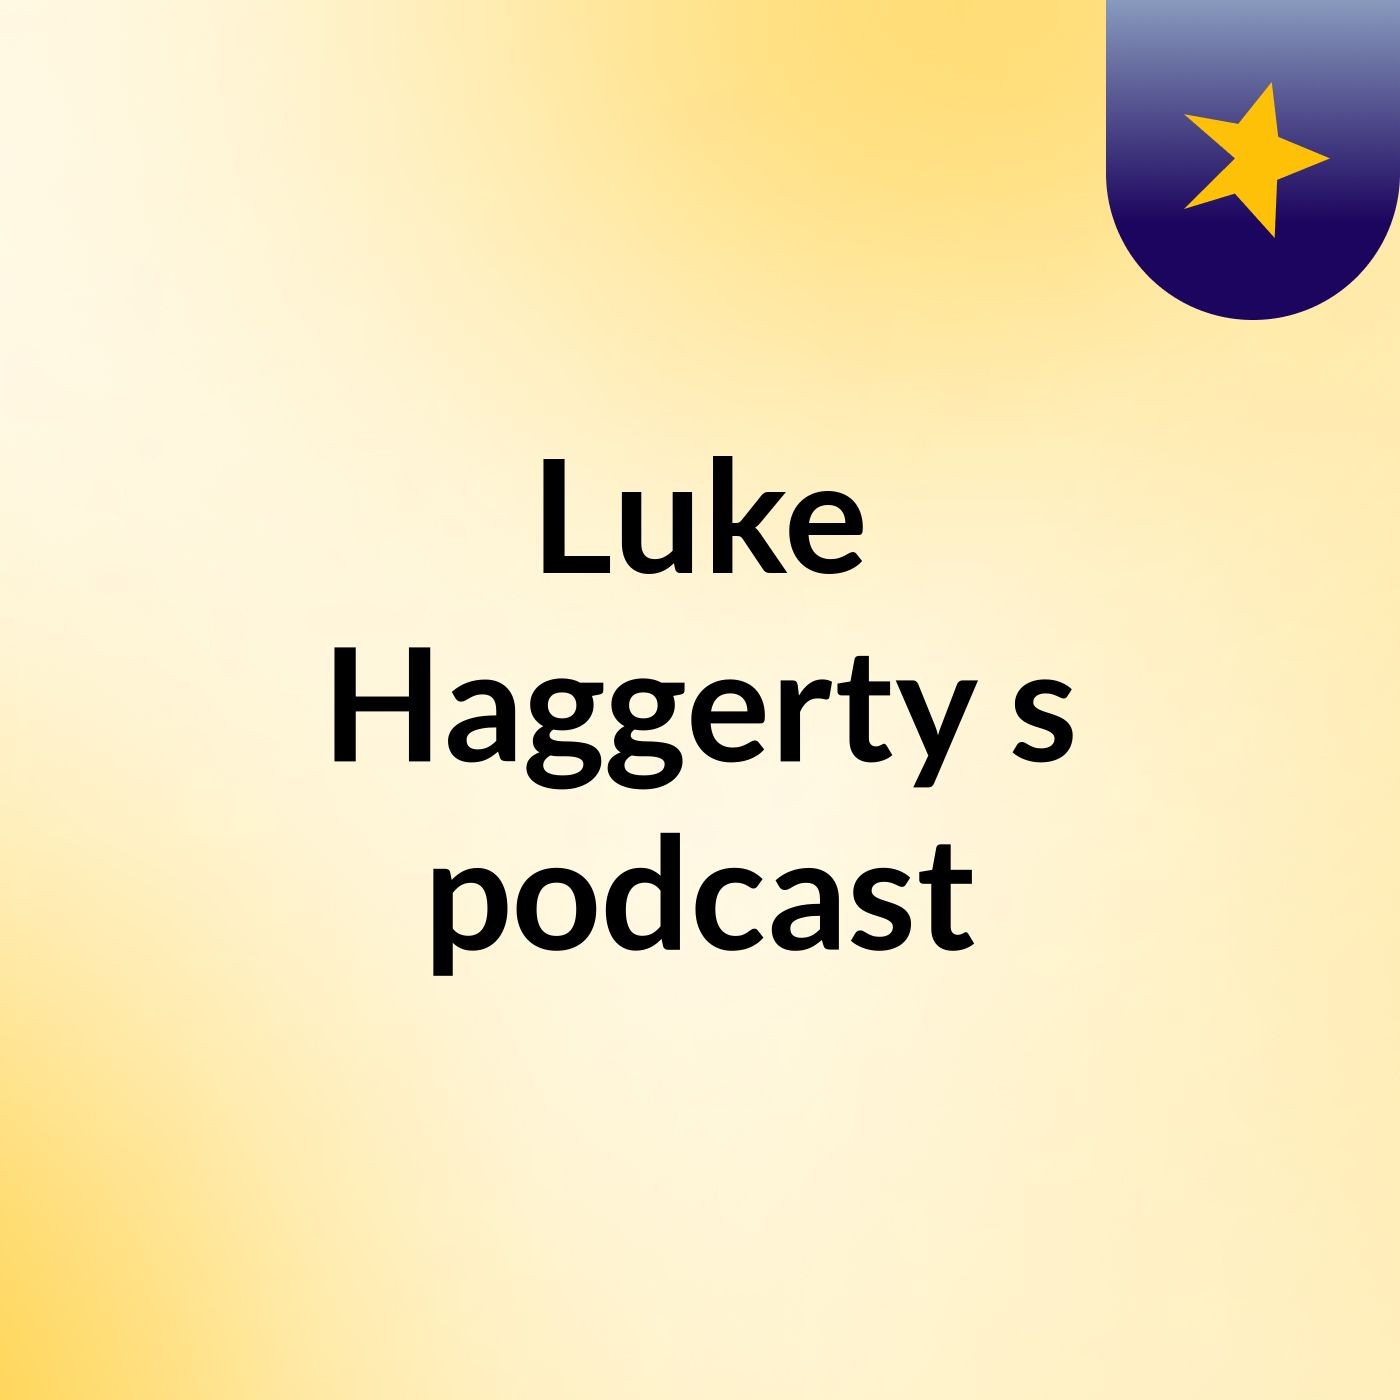 Episode 3 - Luke Haggerty's podcast